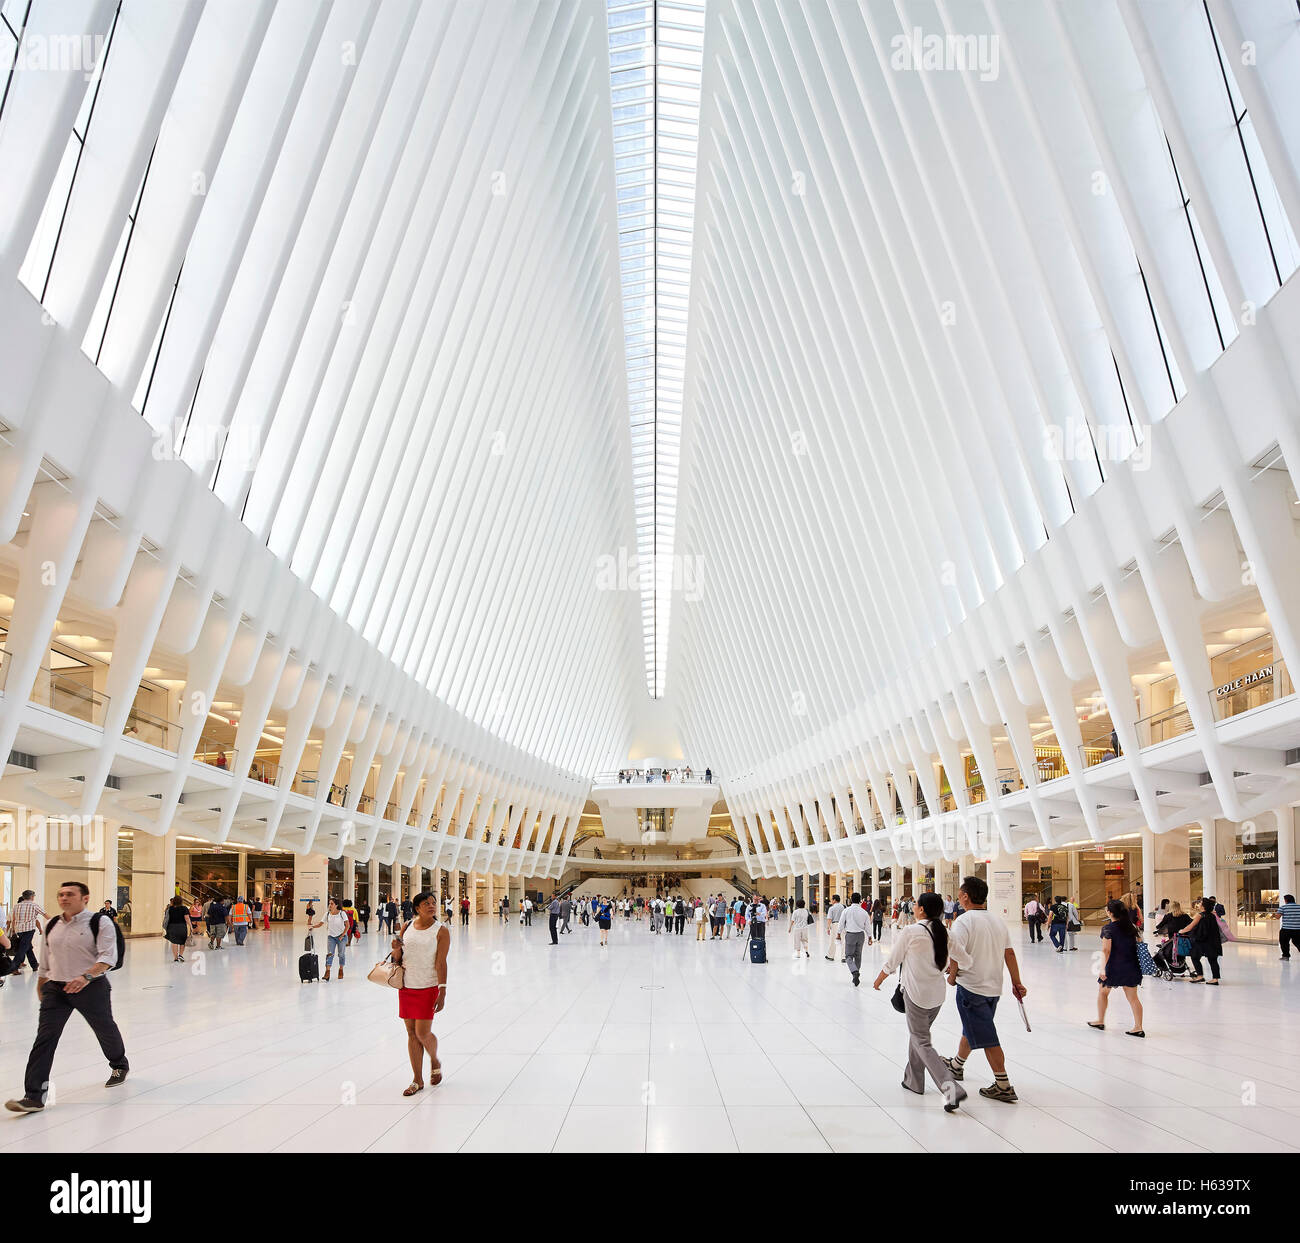 Cathedral-like transit hall interior from arrival level. The Oculus, World Trade Center Transportation Hub, New York, United States. Architect: Santiago Calatrava, 2016. Stock Photo